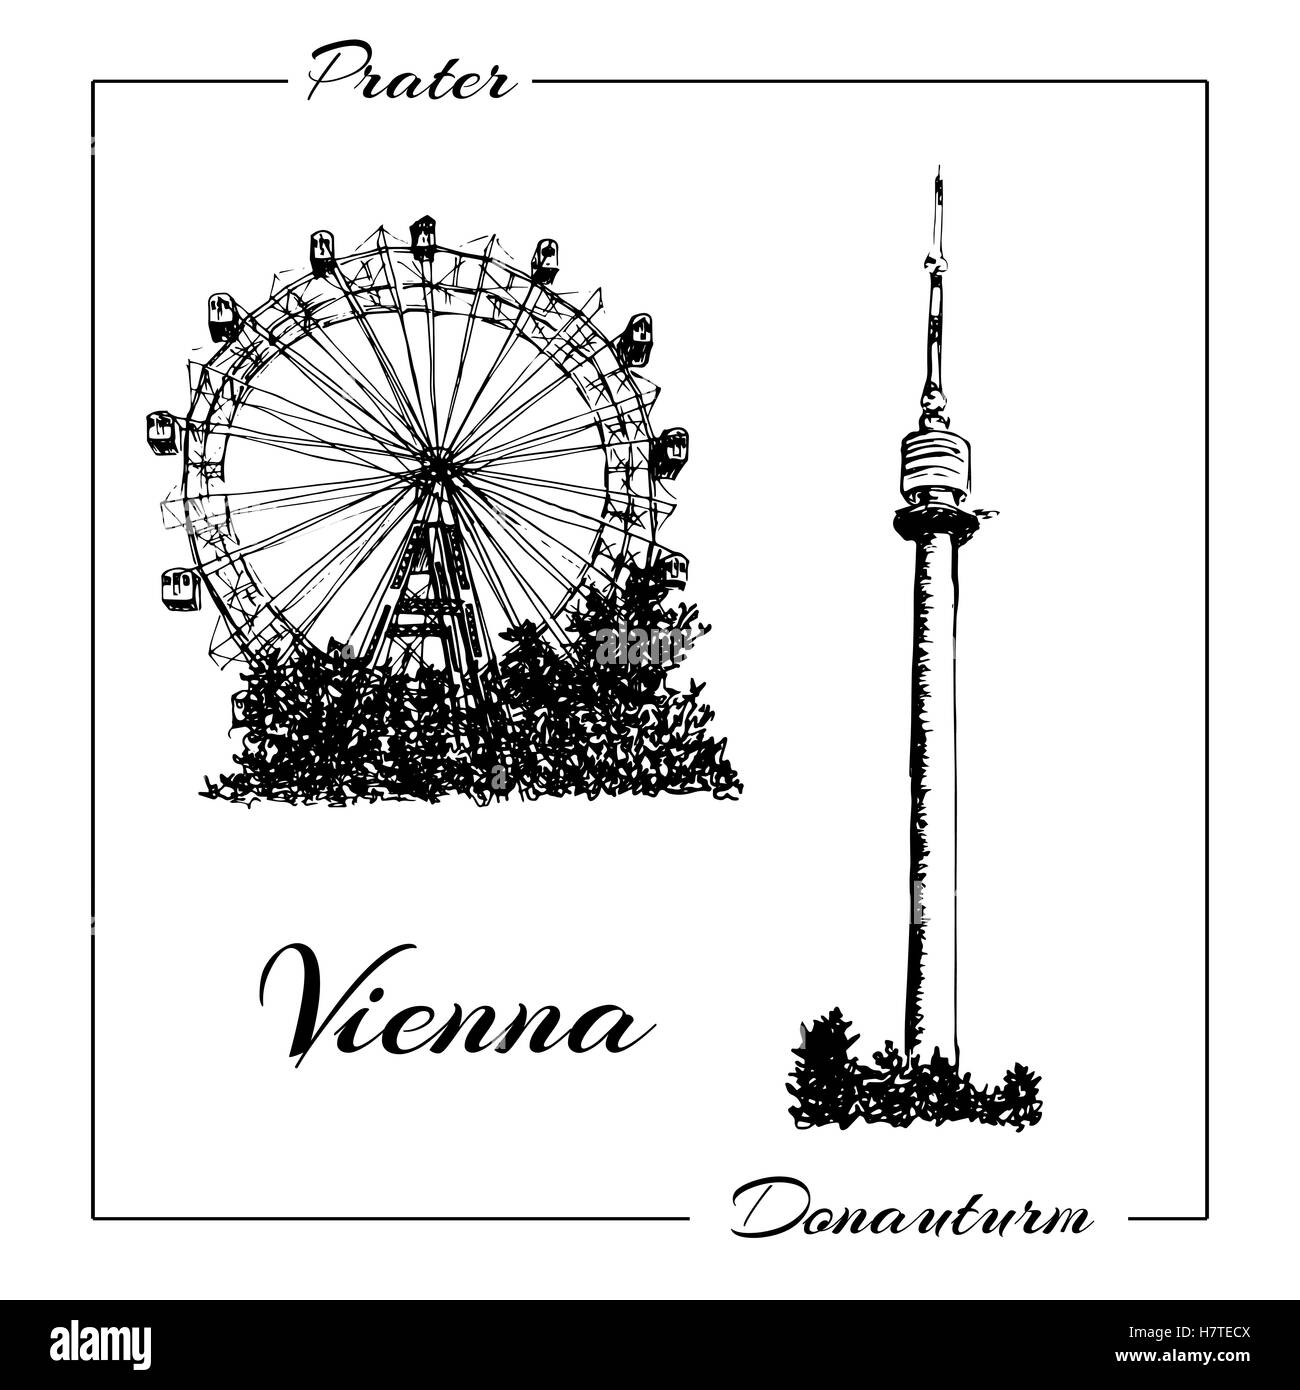 Vienna prater and donauturm. Stock Vector